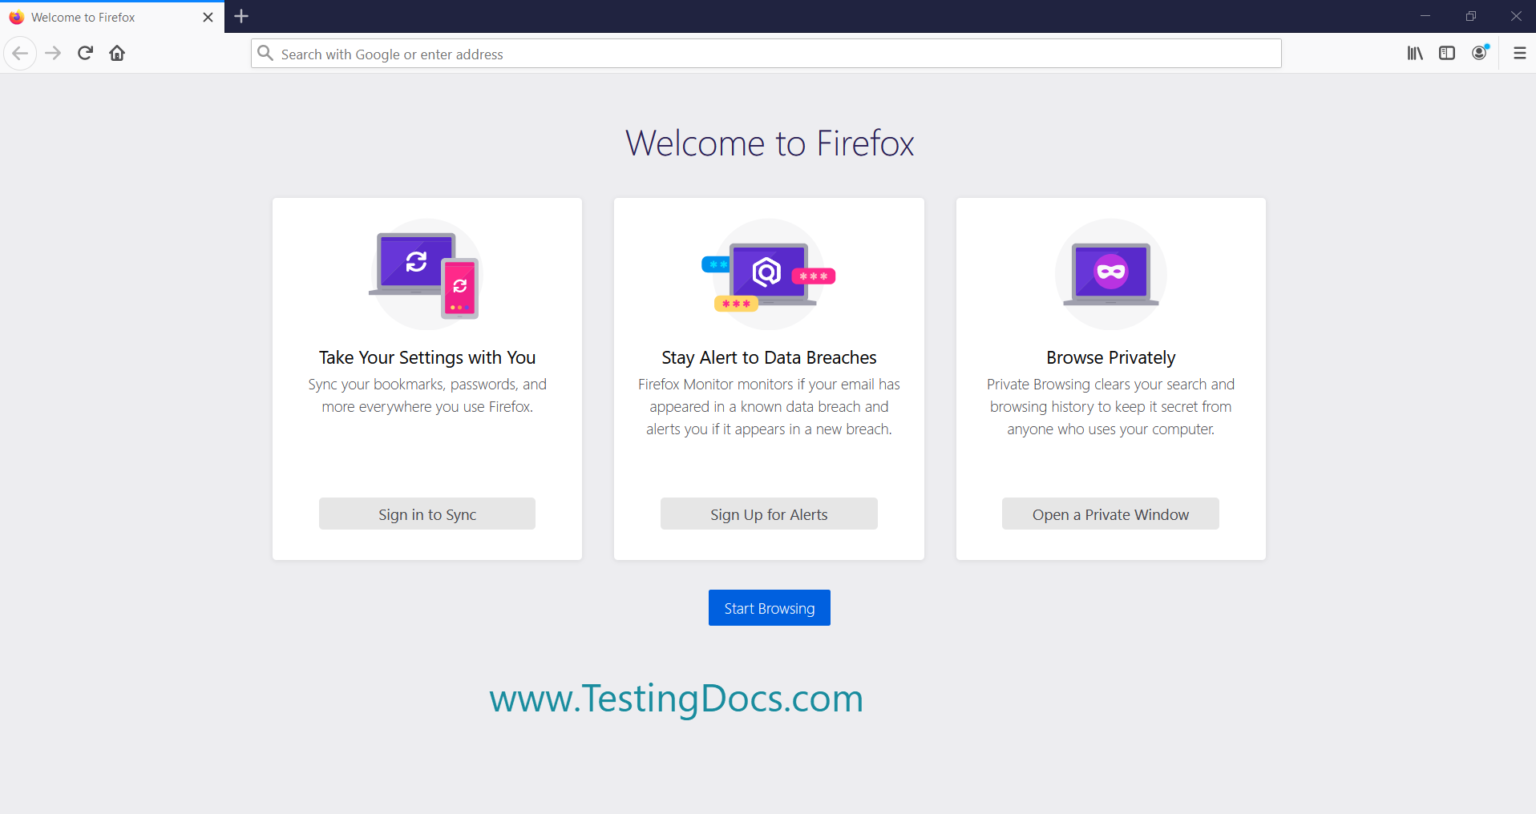 firefox vr desktop app